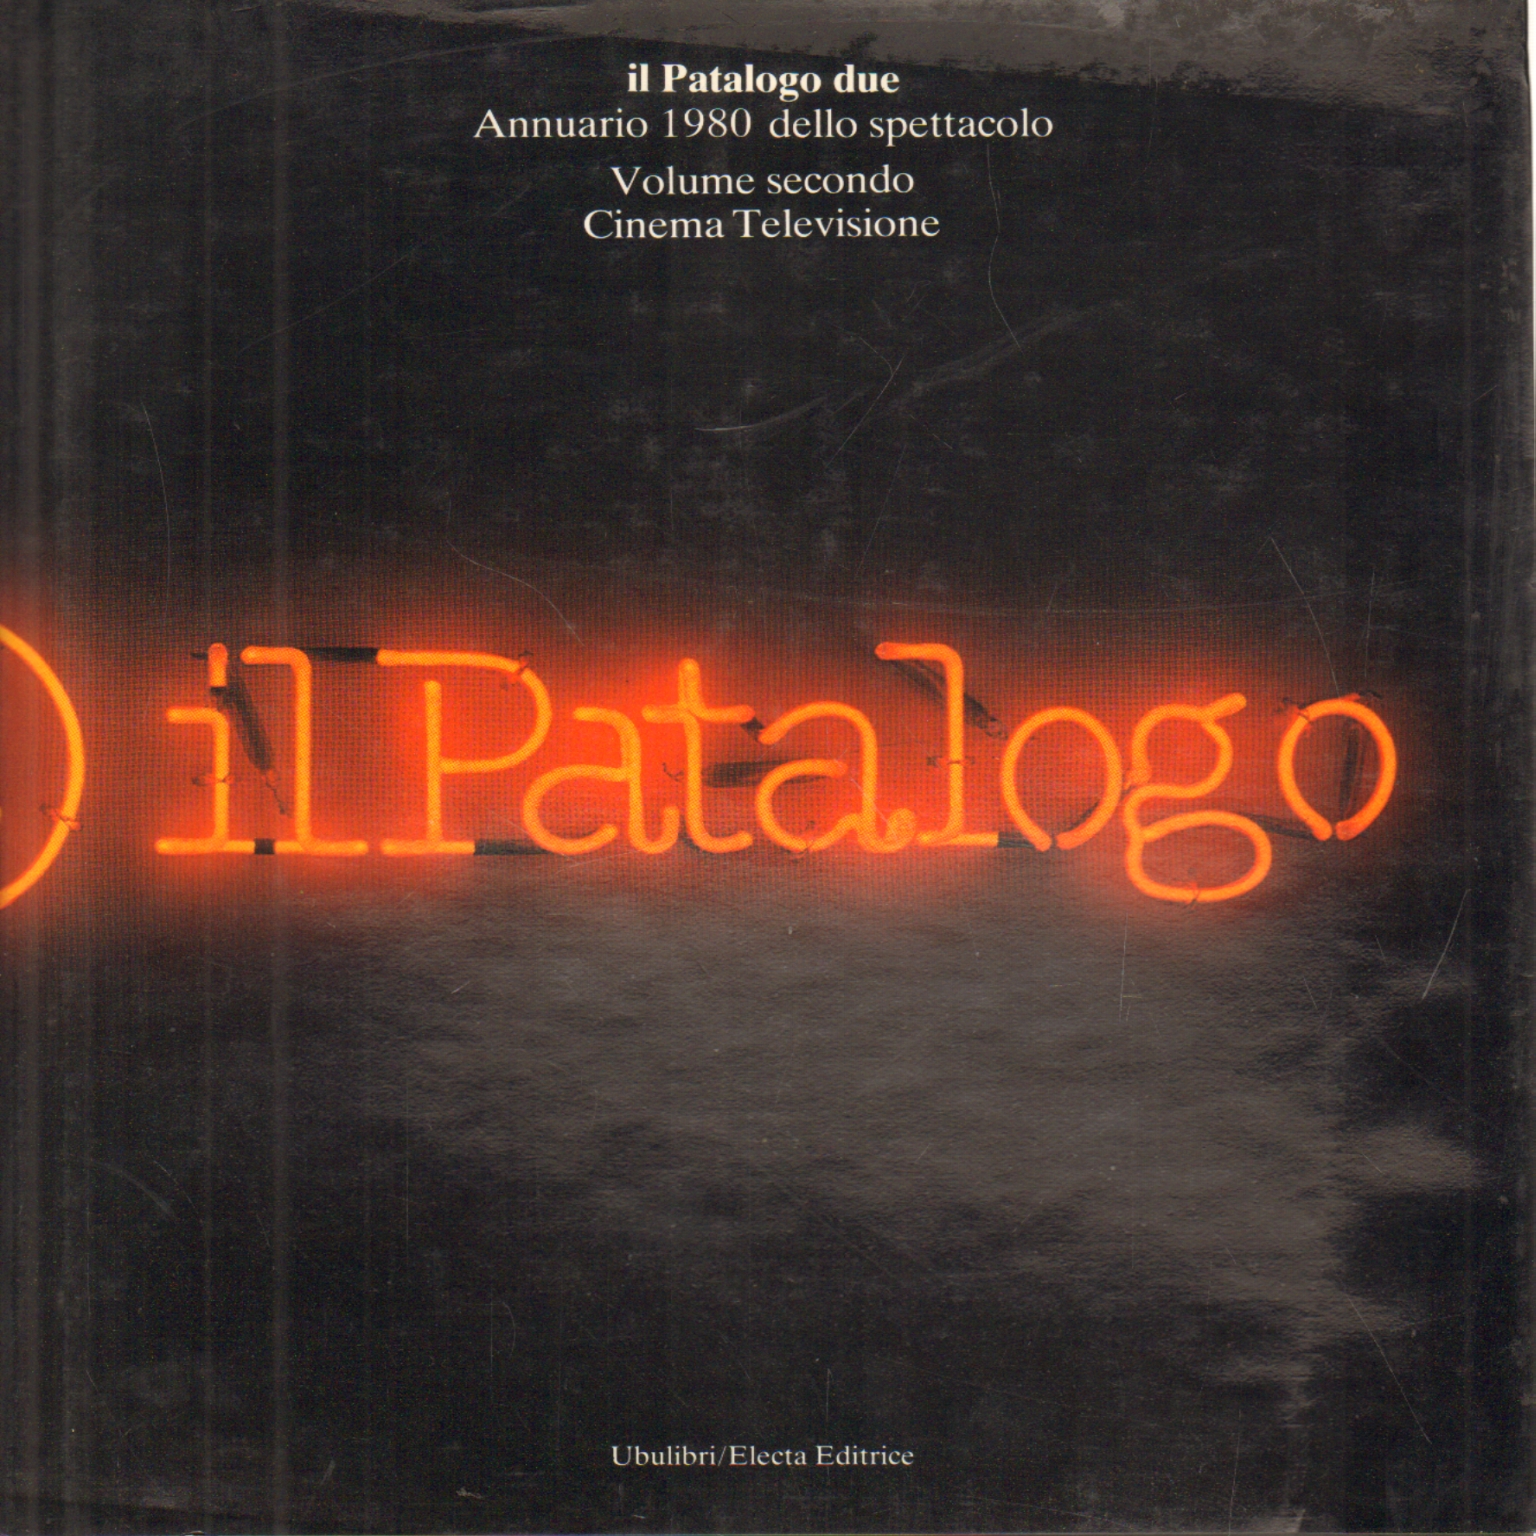 Das Patalogo zwei. Jahrbuch 1980 des show vo, AA.VV.